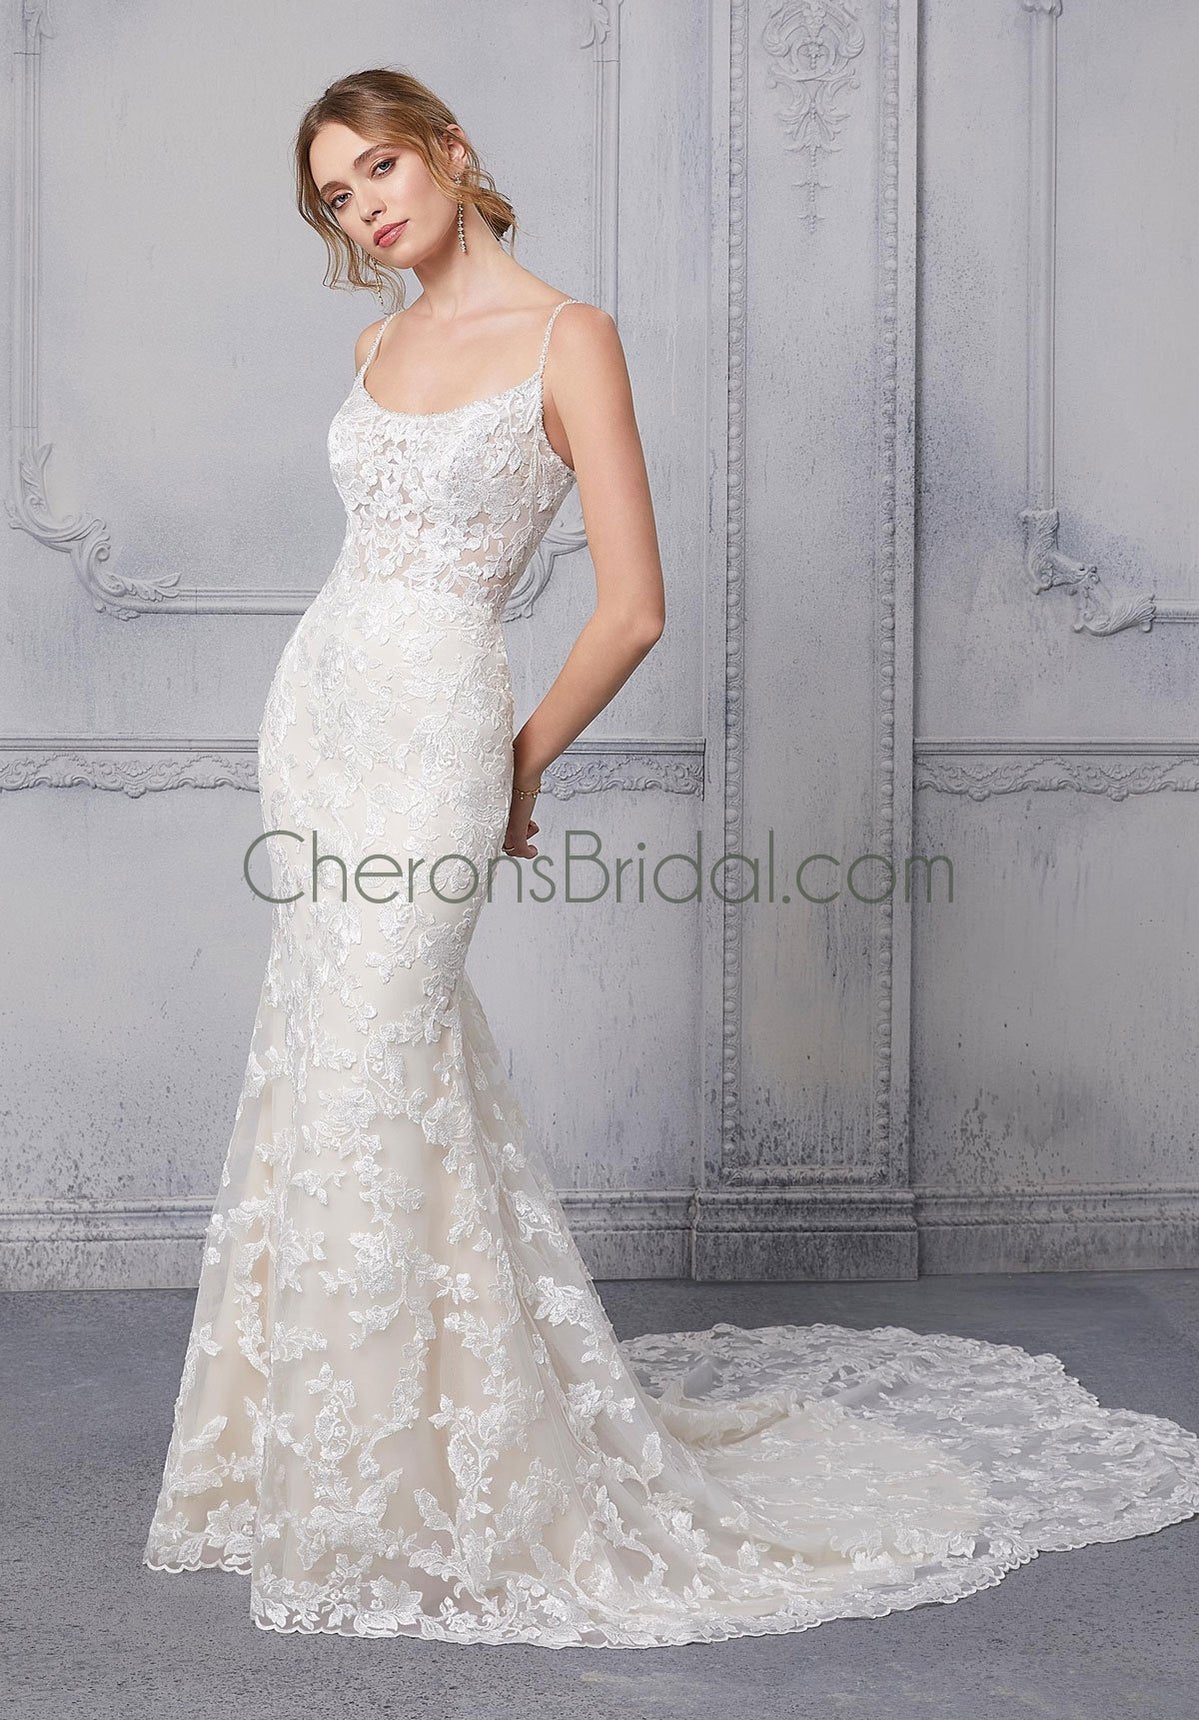 Blu - 5919 - Carrie - Cheron's Bridal, Wedding Gown - Cheron's